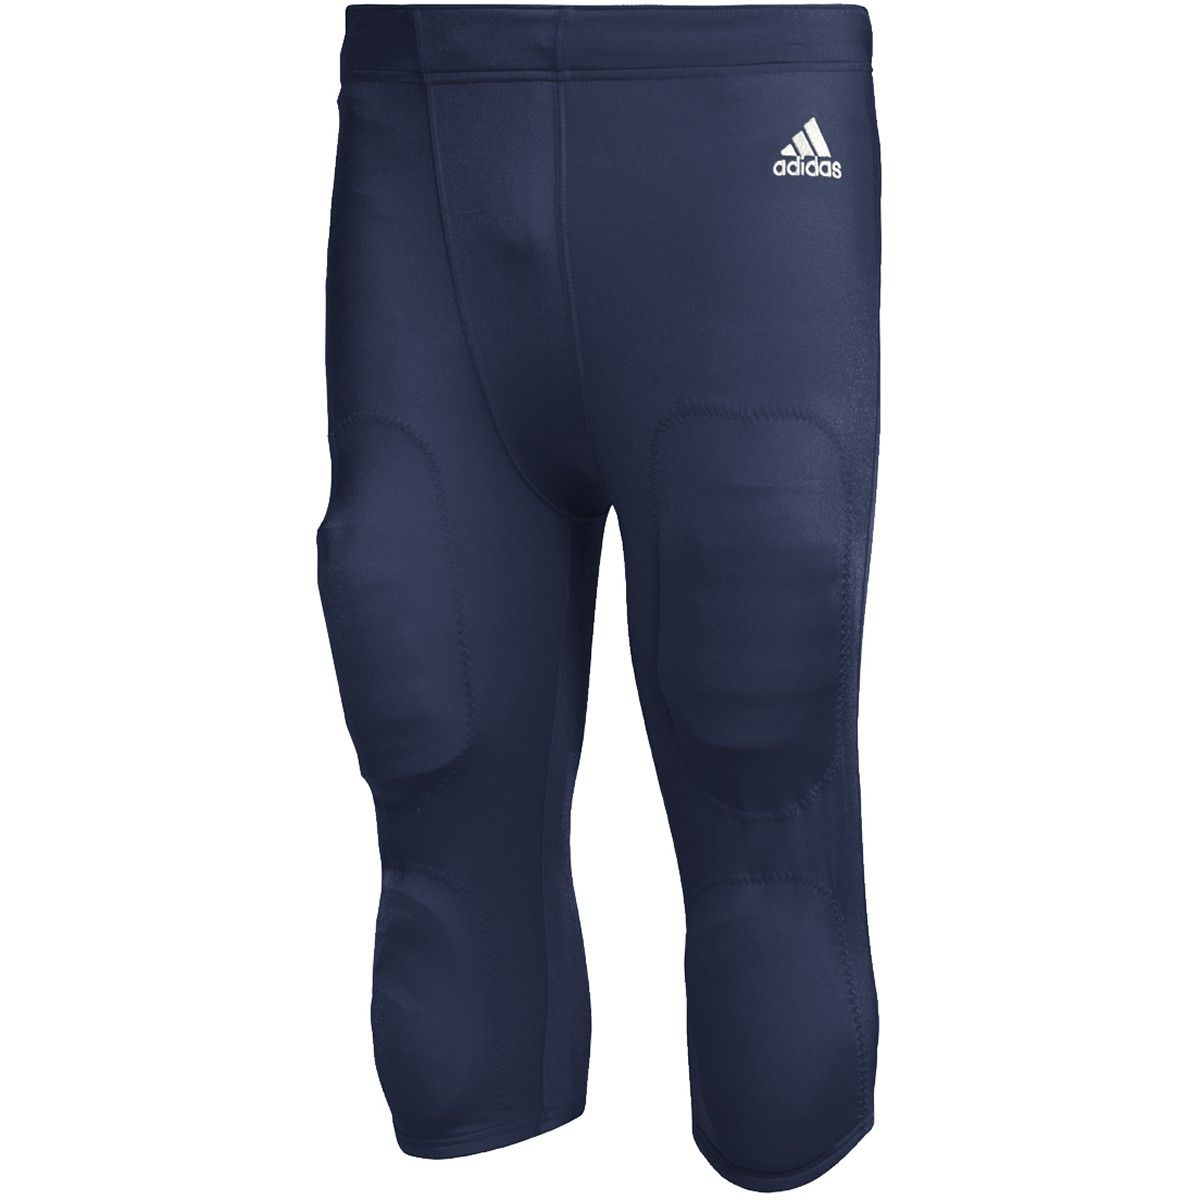 Tiro 23 League Pants Adidas - HS7232